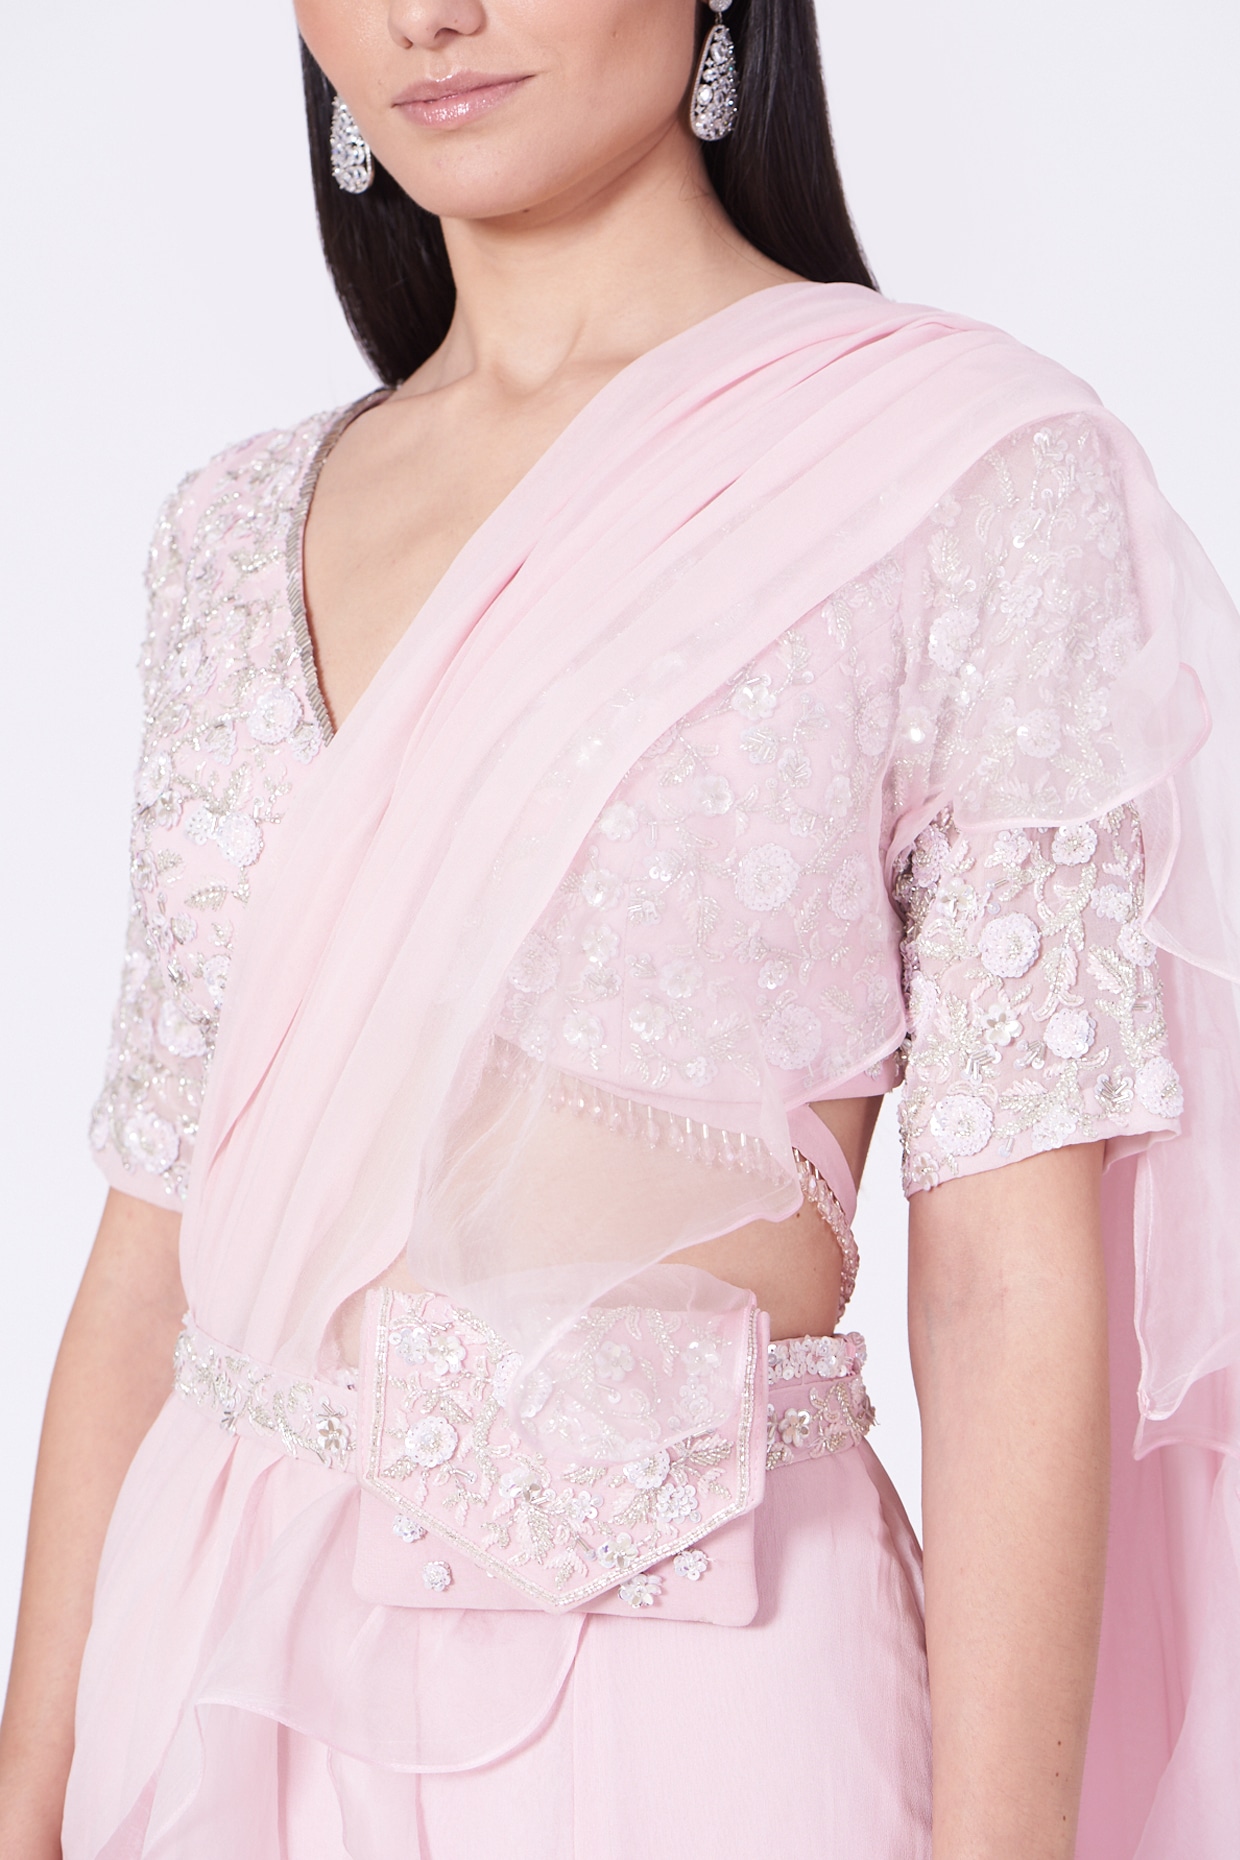 Pink Embroidery Work Lehenga Choli Lengha Wedding Bollywood Dress Sari Saree  | eBay